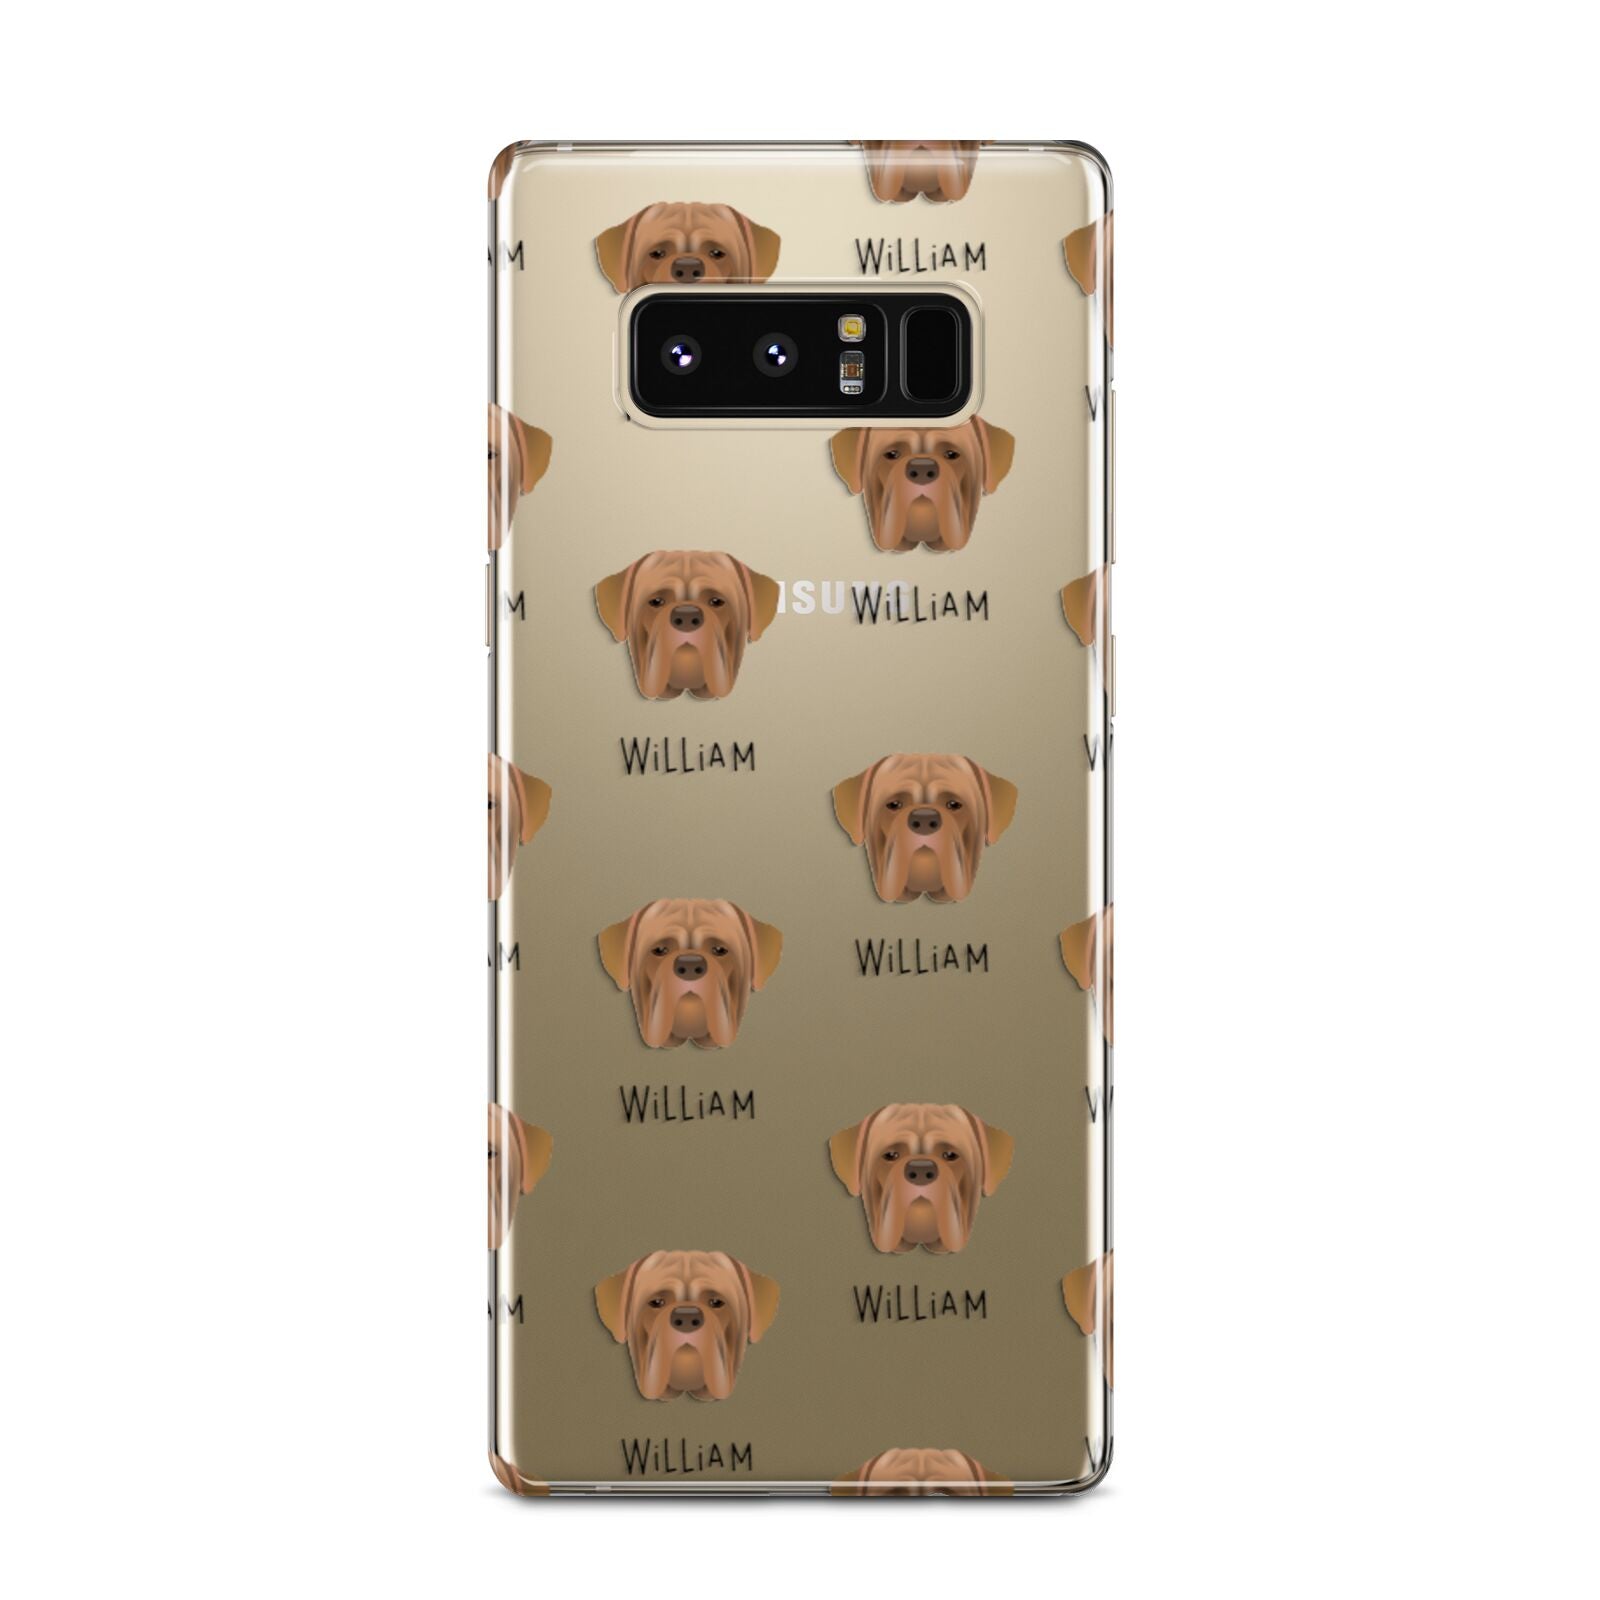 Dogue de Bordeaux Icon with Name Samsung Galaxy Note 8 Case